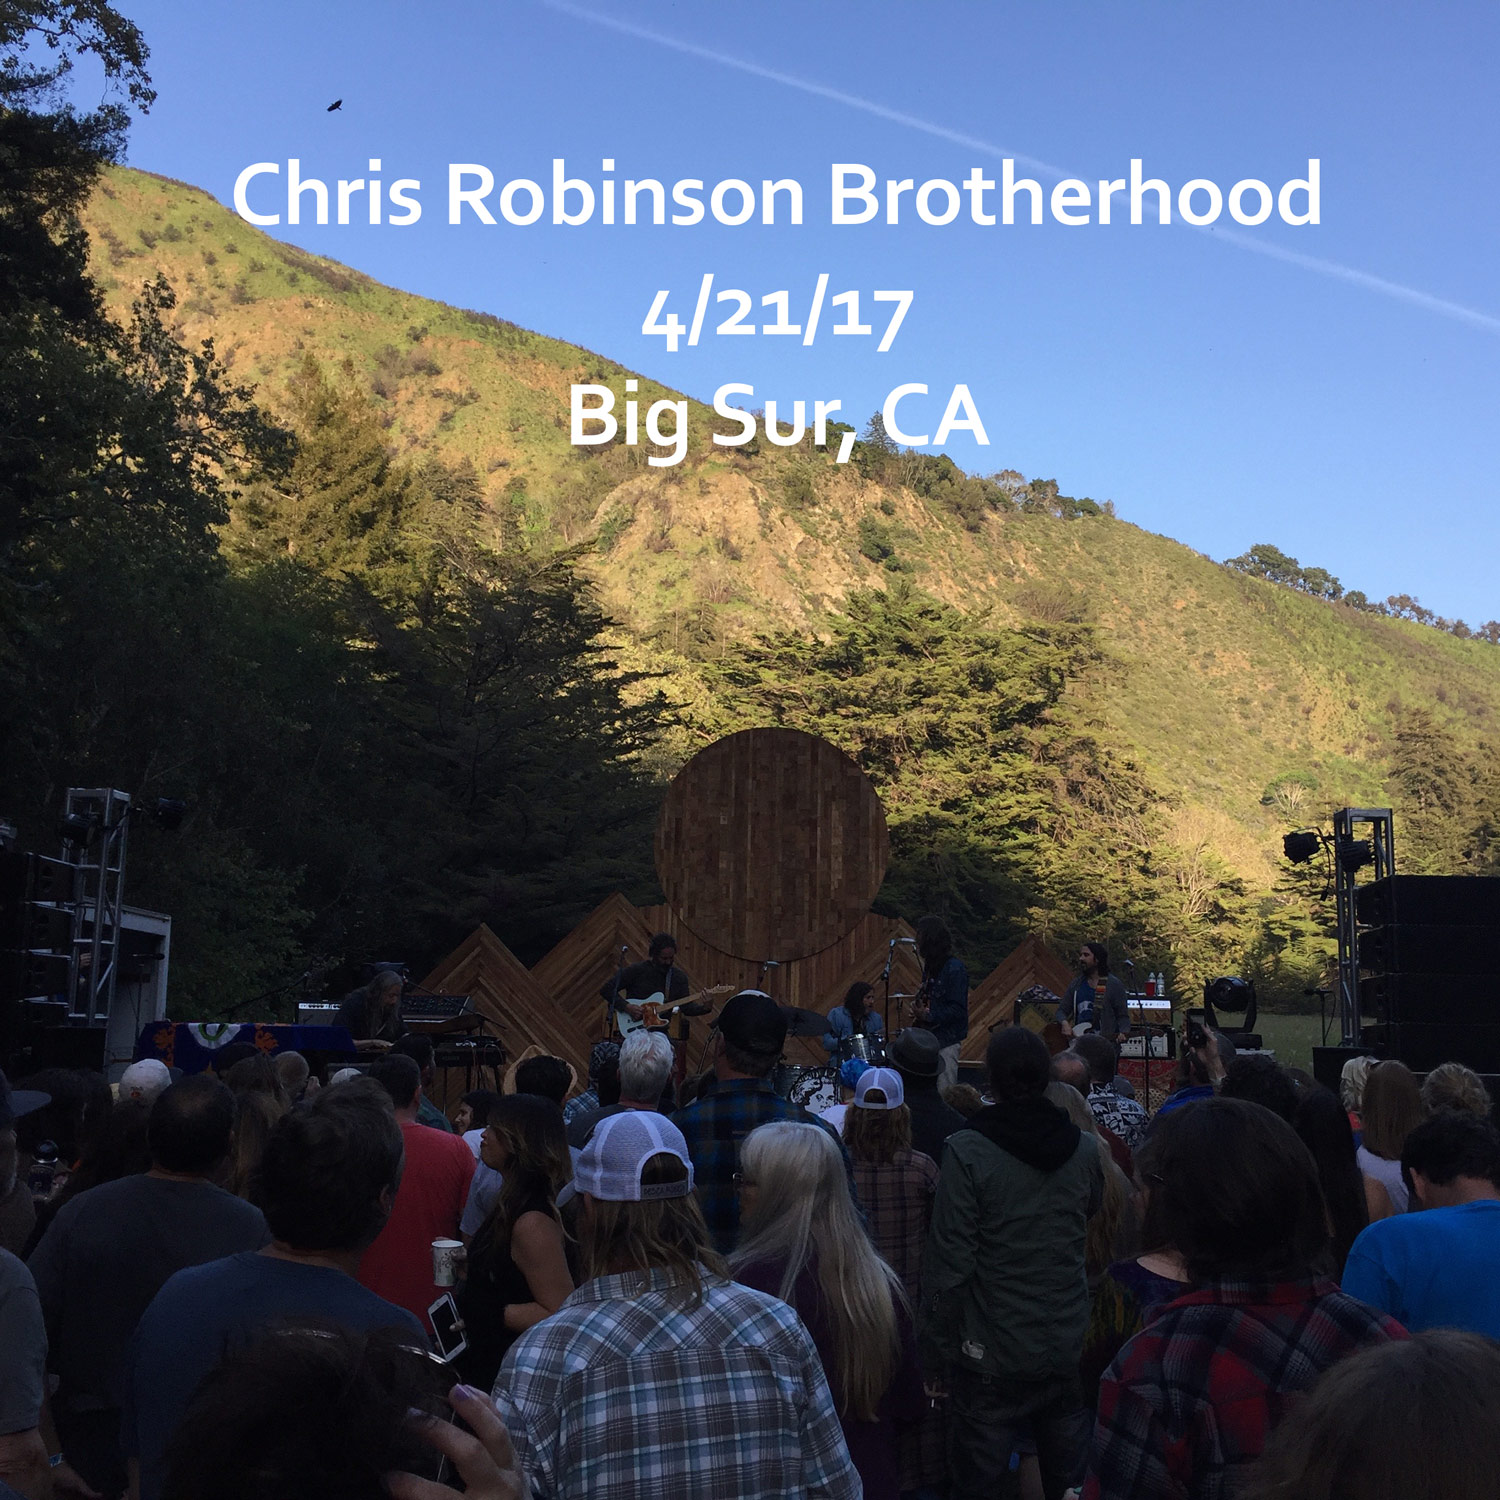 ChrisRobinsonBrotherhood2017-04-21FreaksForTheFestivalFernwoodResortBigSurCA.jpg